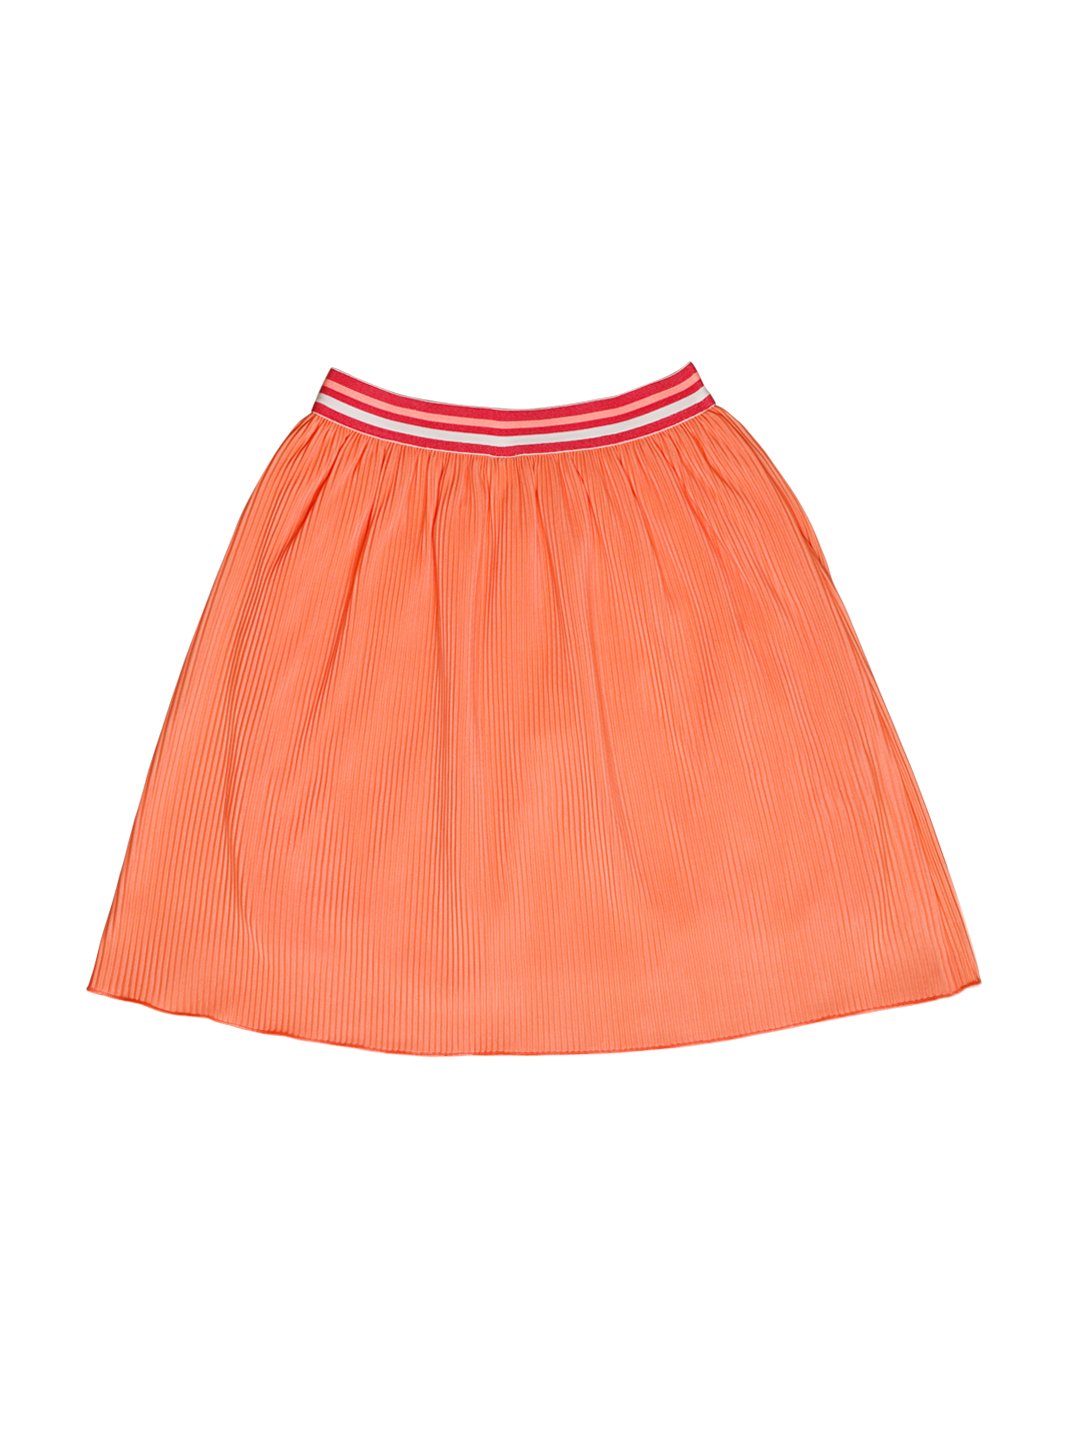 Ishin Girls Polyester Orange Solid Flared Skirt